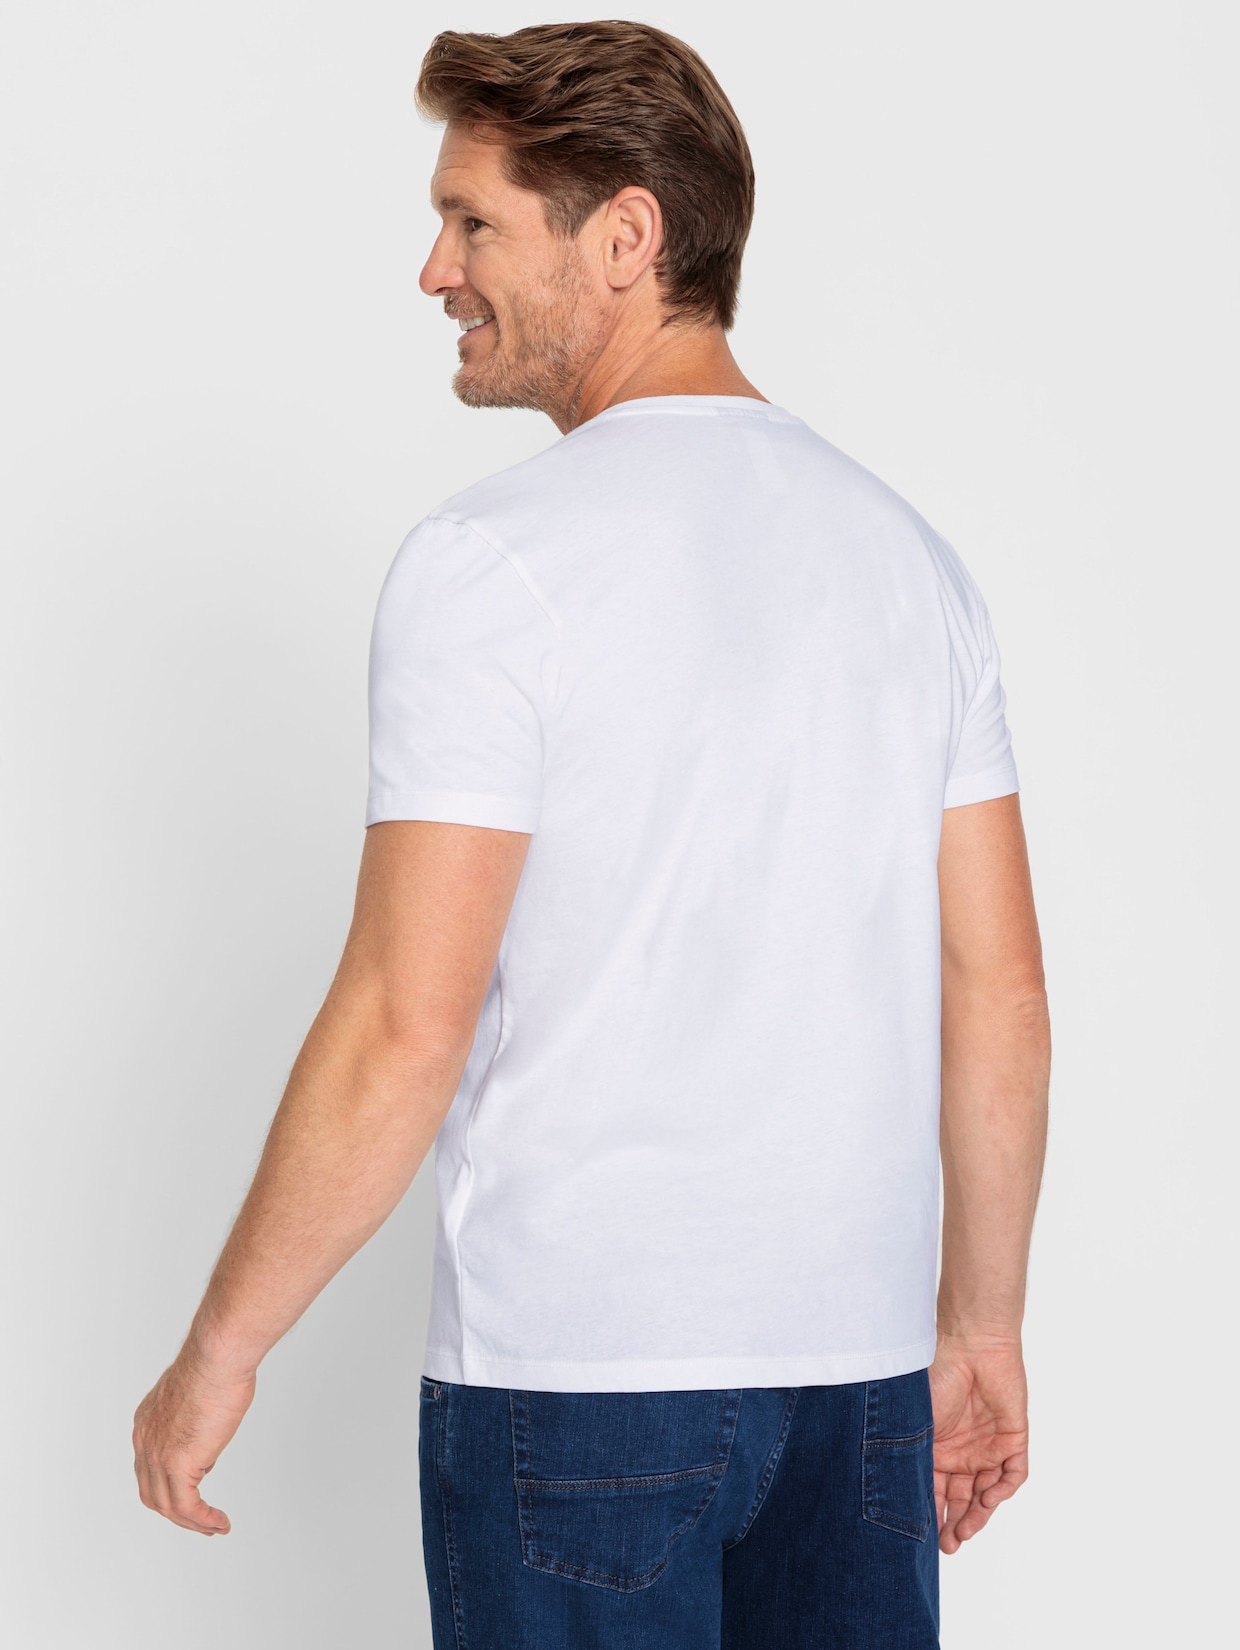 Catamaran Shirts (2 stuks) - wit + jeansblauw